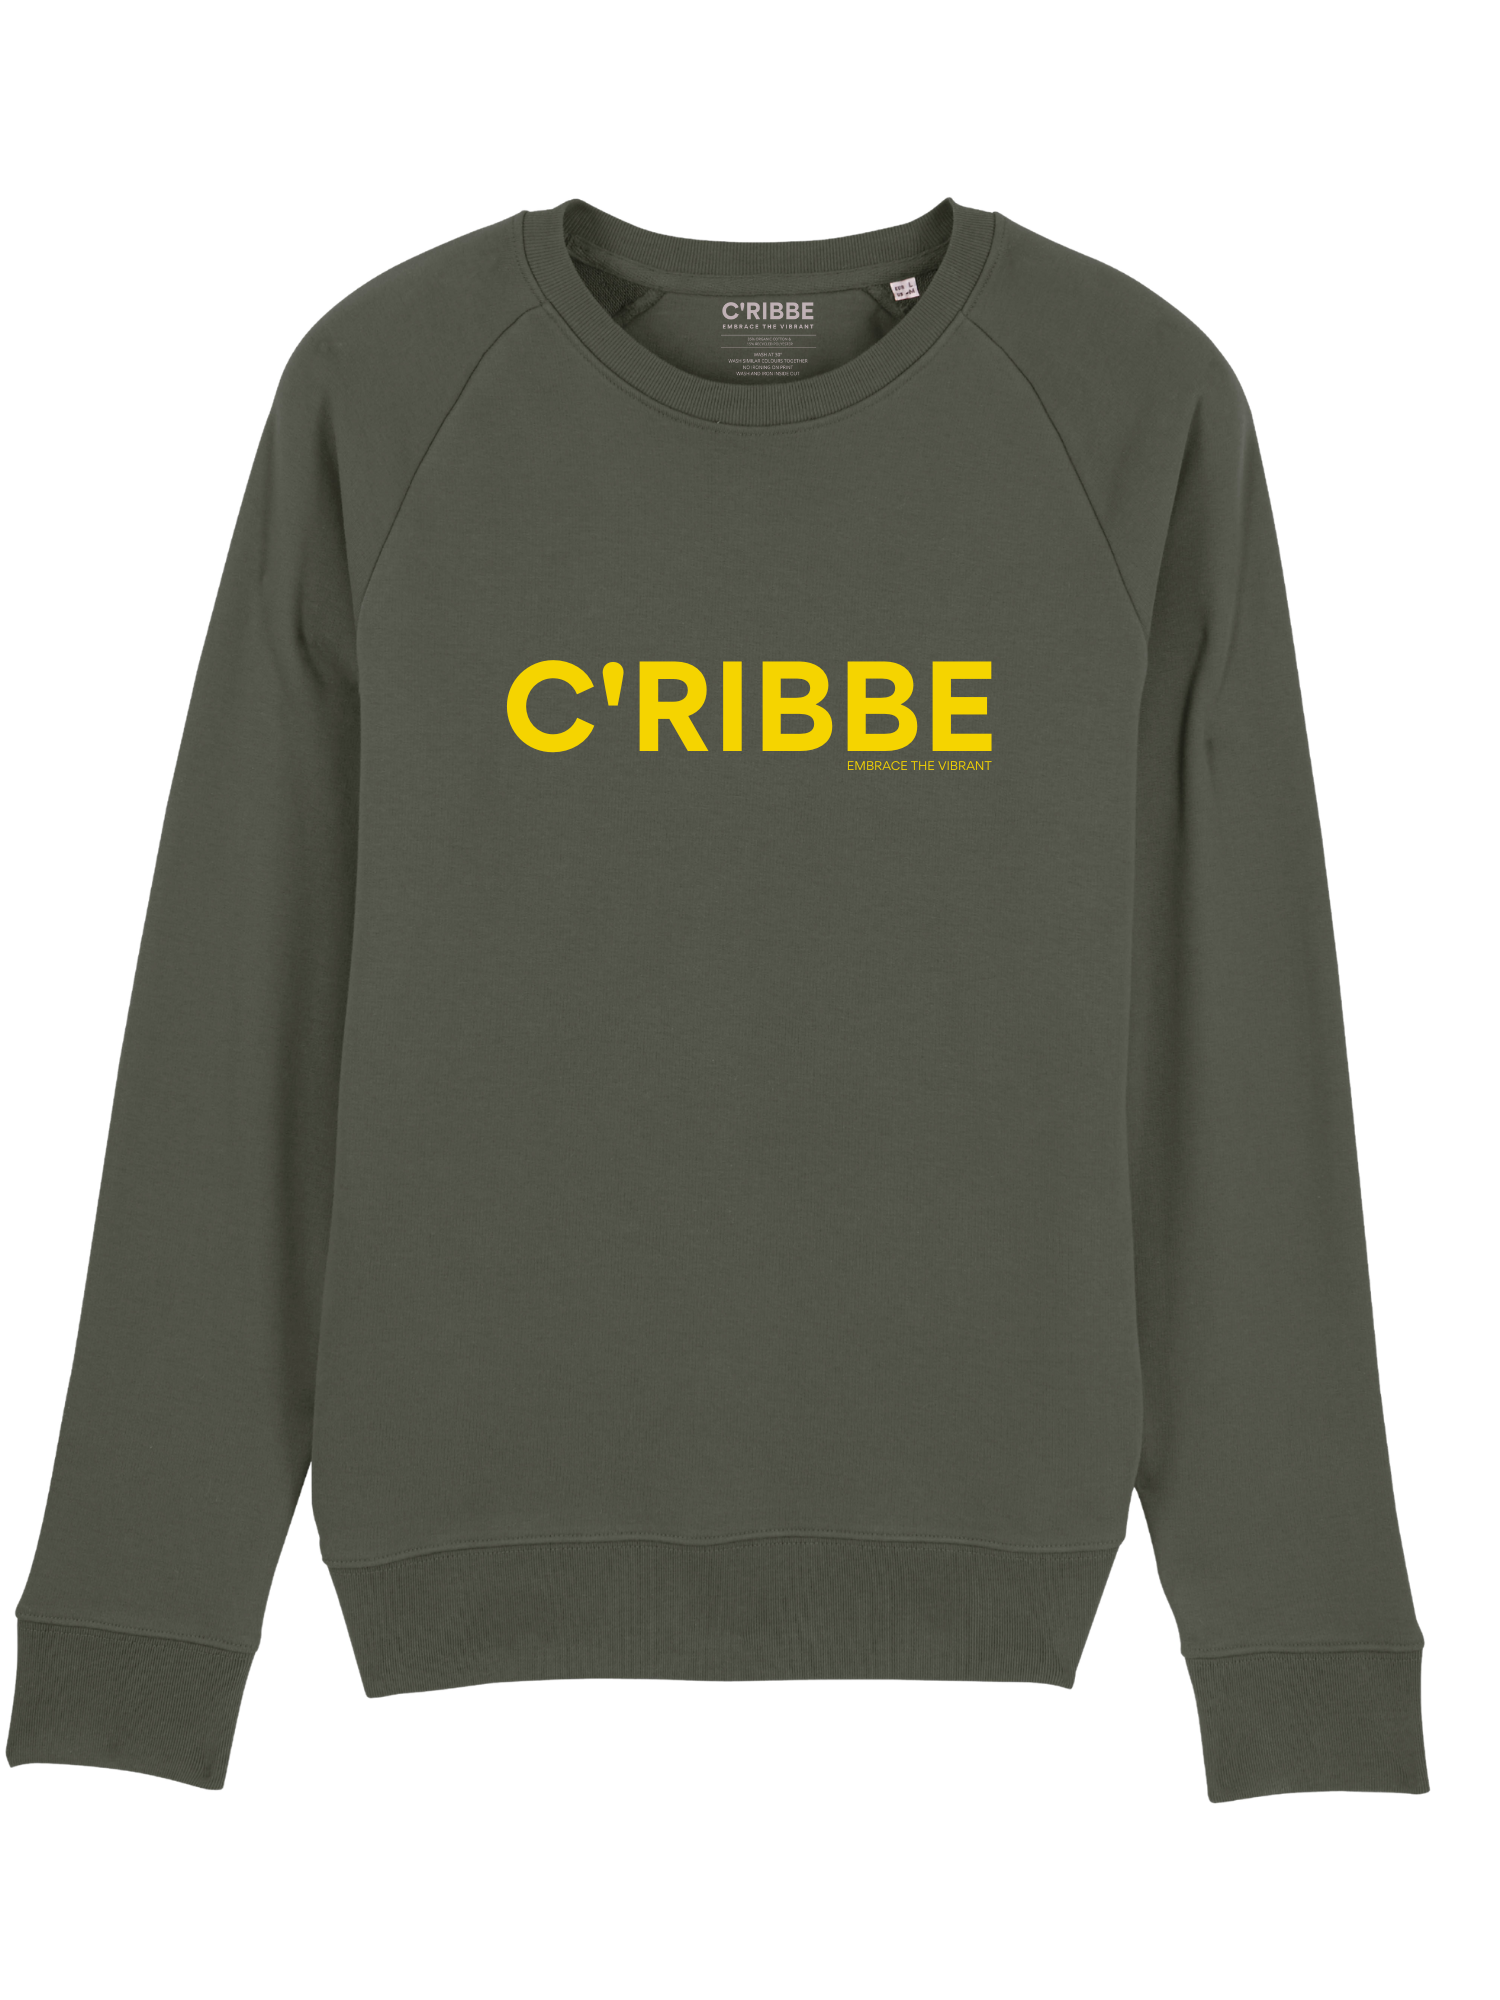 C'RIBBE Men's Crew Neck Sweatshirt, French Navy